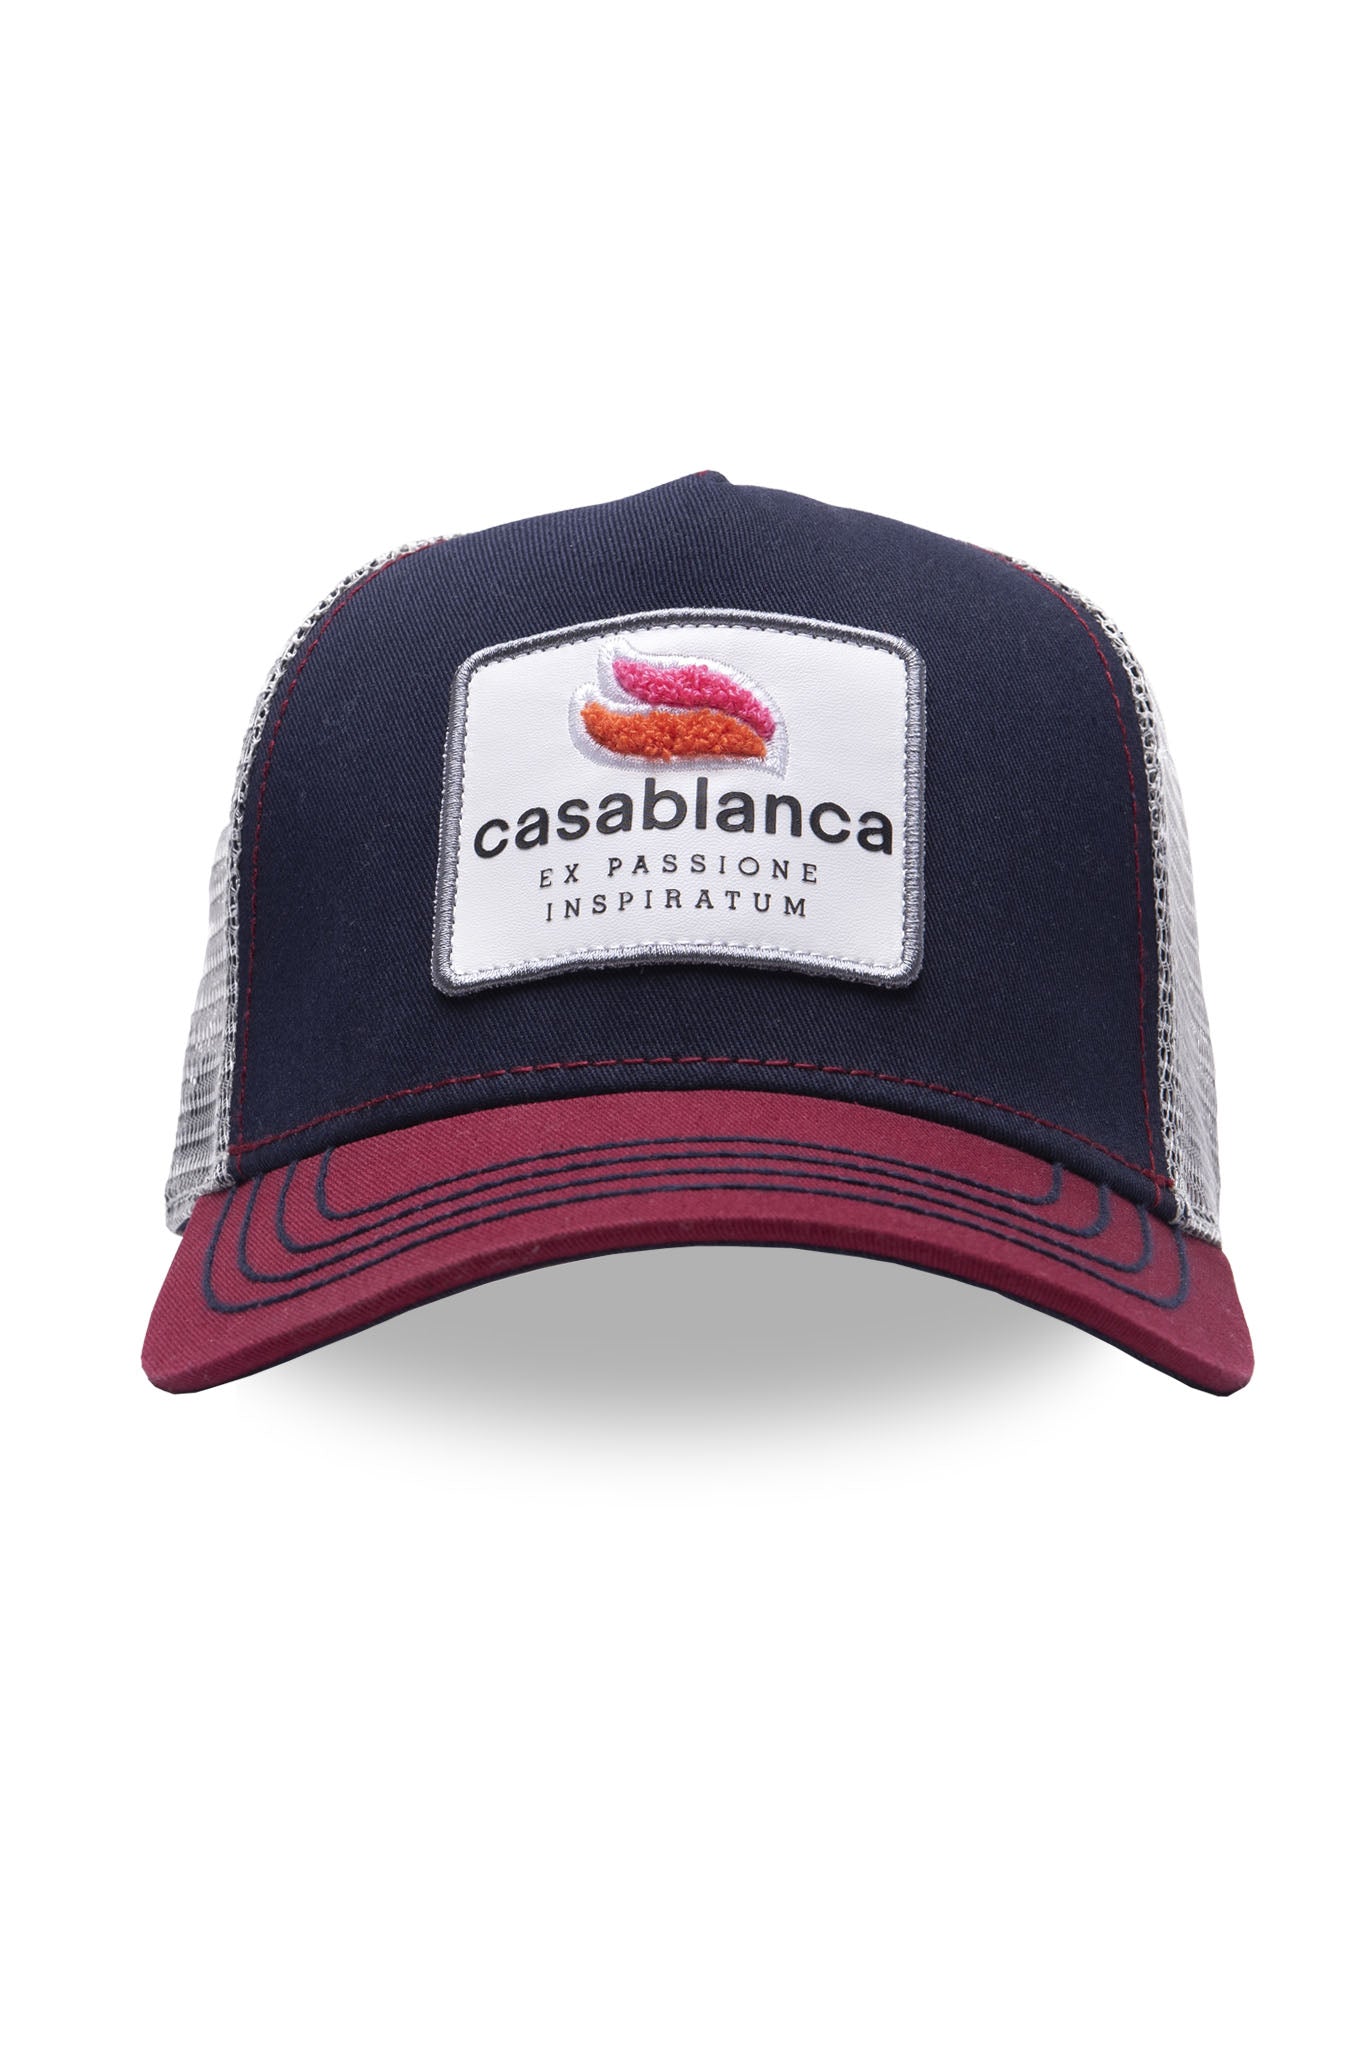 casablanca - Trucker Cap Navy